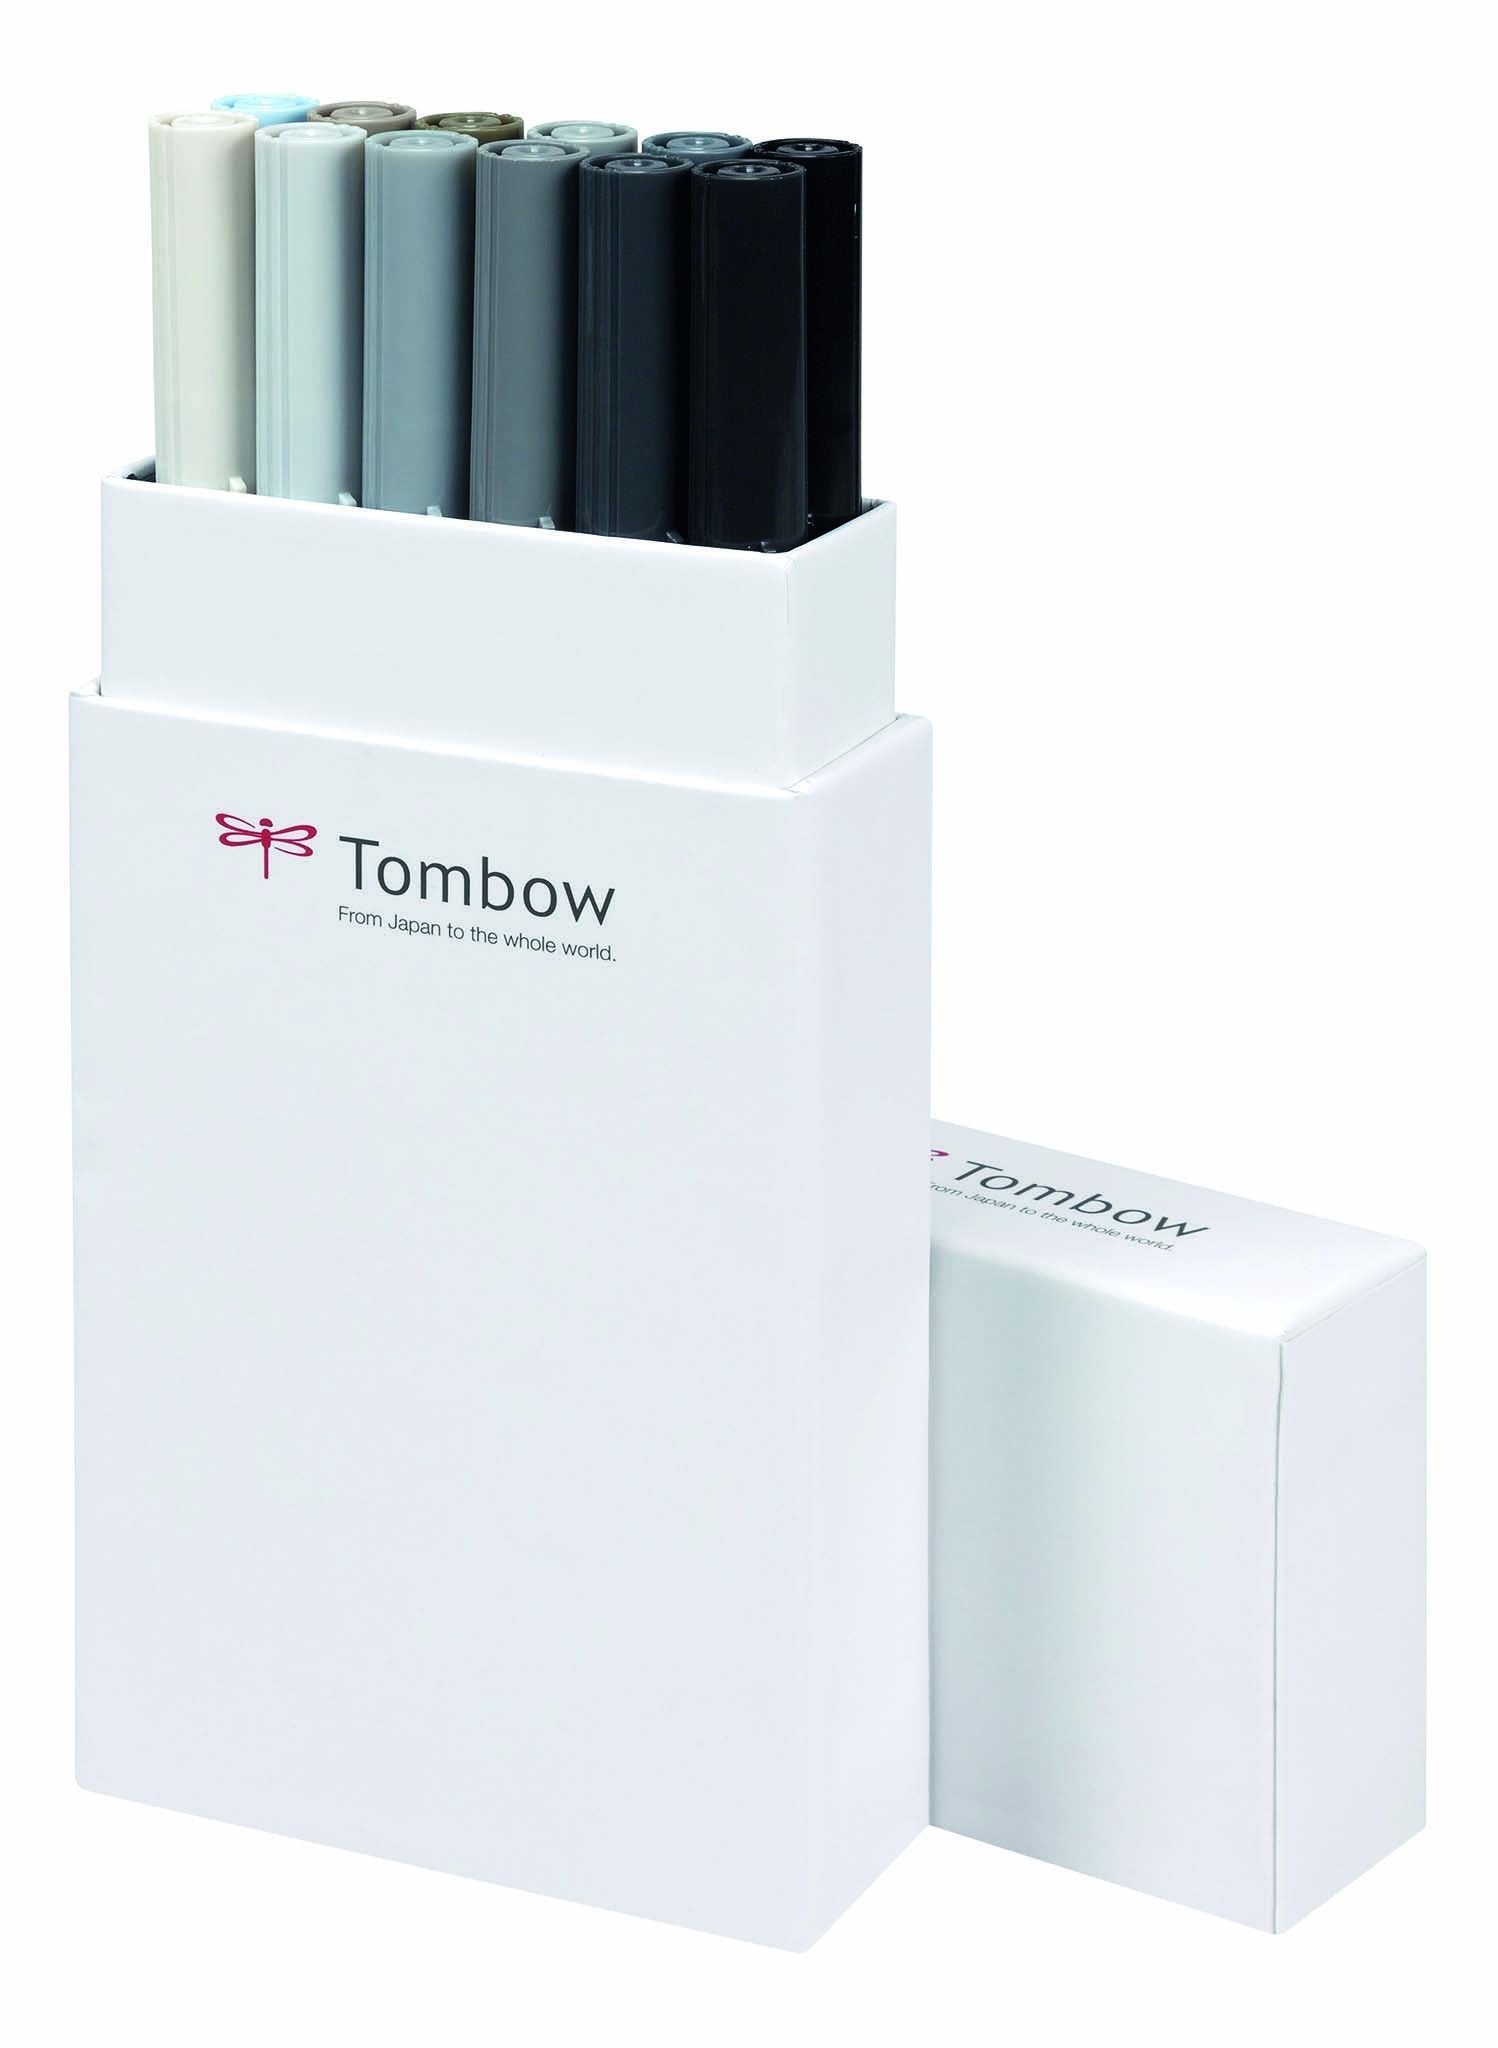 Tombow ABT Dual Brush Pens - Grey Colours - 12-pack - Create A Little Magic (Pty) Ltd